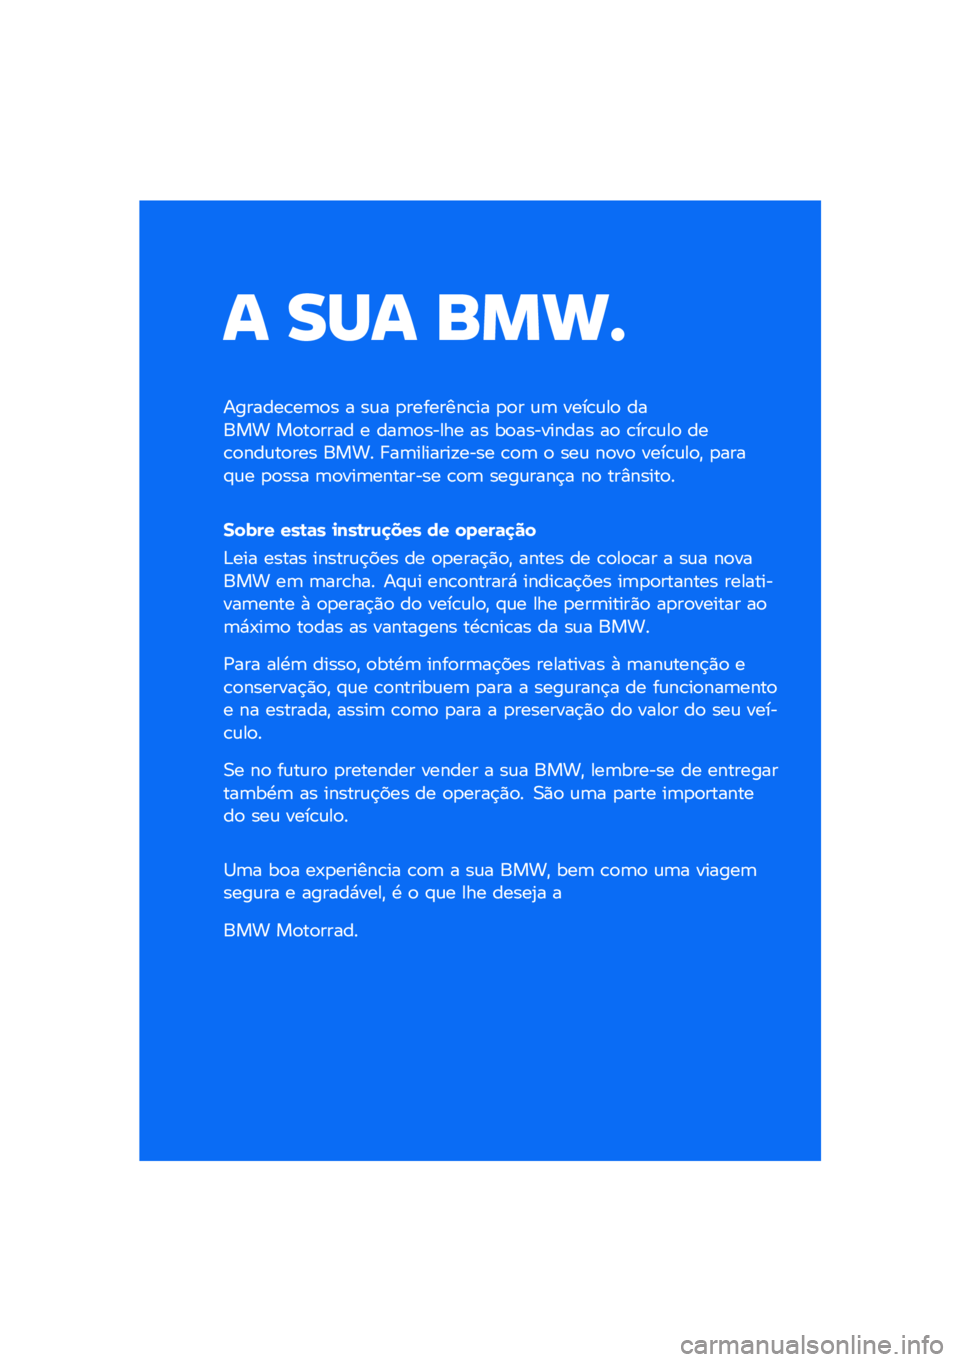 BMW MOTORRAD F 900 R 2021  Manual do condutor (in Portuguese) � ��� ����\b
�������\b��	�
� � ��\f� �
��������\b�� �
�
� �\f�	 ����\b�\f��
 ����� ��
��
���� � ���	�
����� �� ��
��������� ��
 �\b���